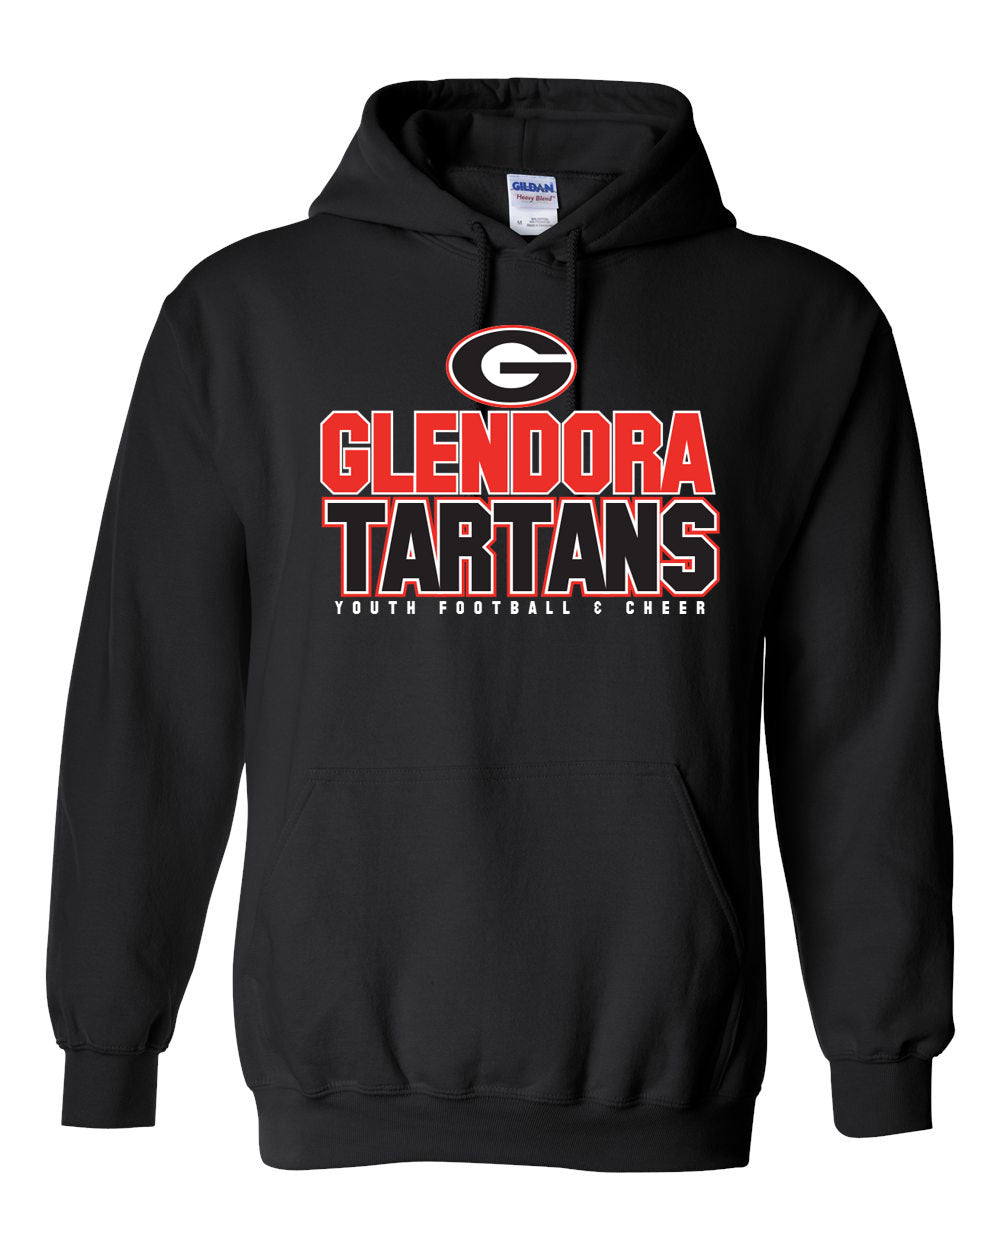 Glendora Tartans - Black hoodie